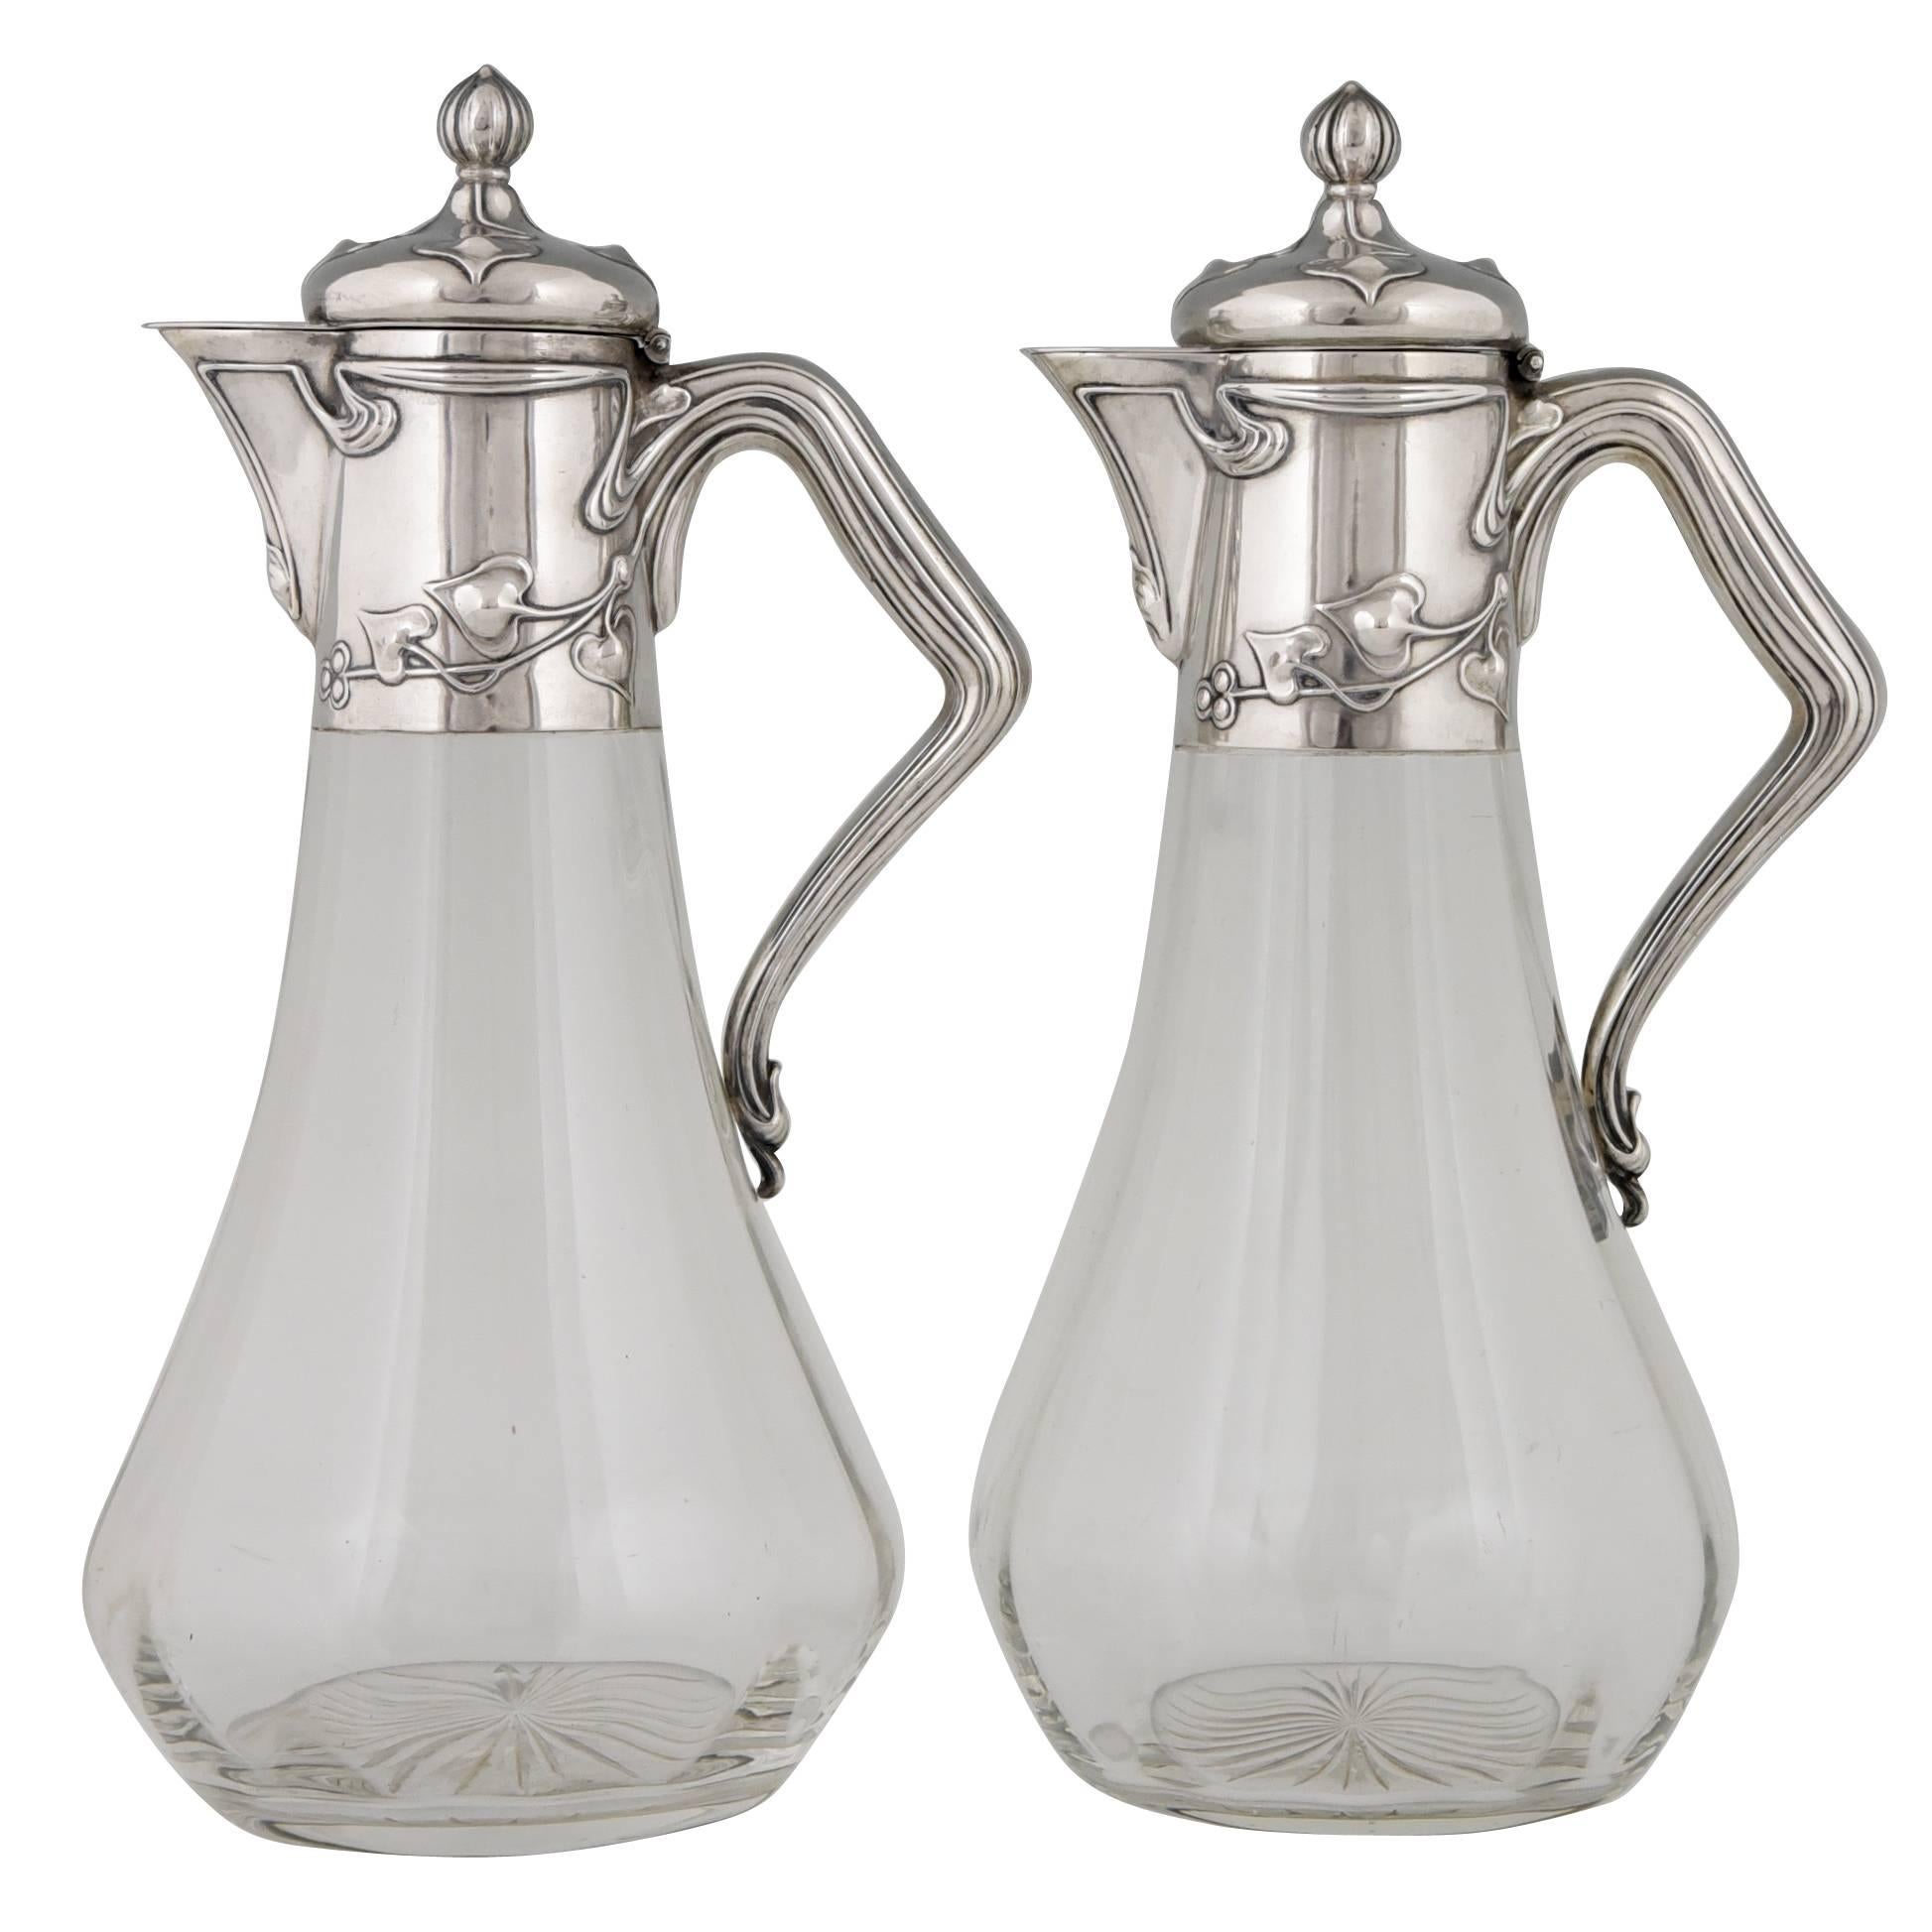 Pair of Art Nouveau German Silver Decanters by Koch & Bergfeld